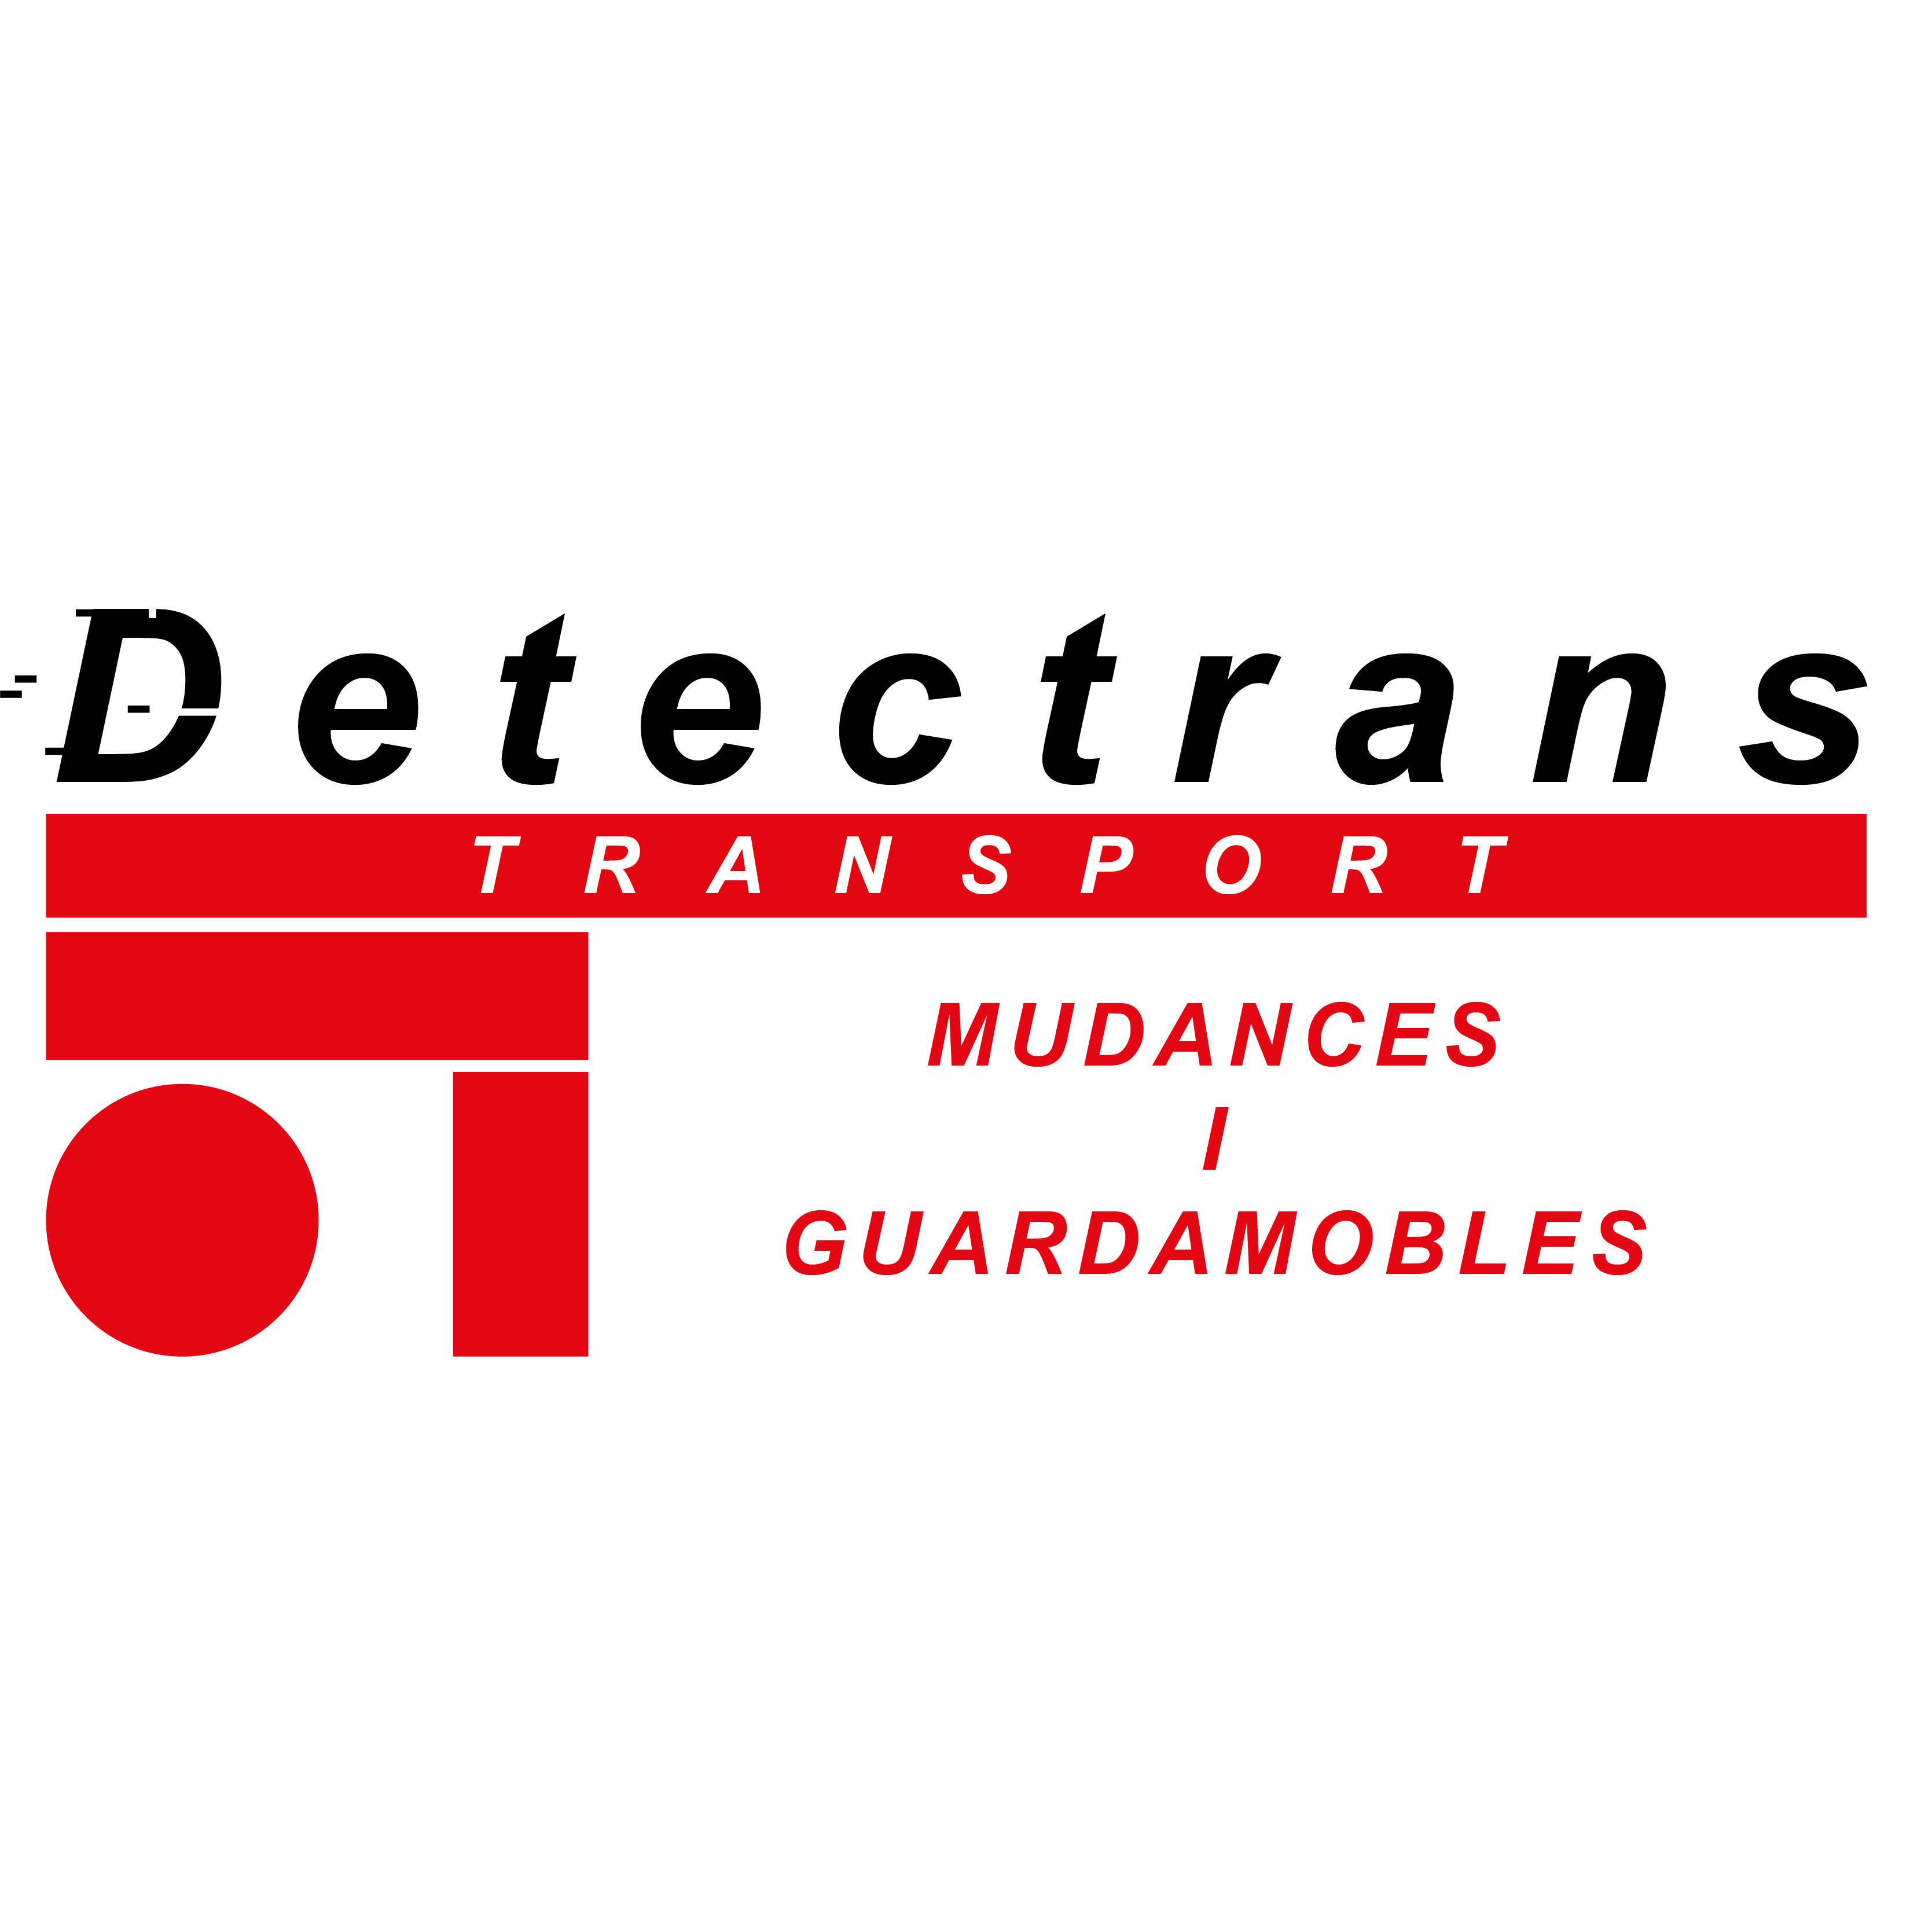 Mudances I Guardamobles Detectrans Logo